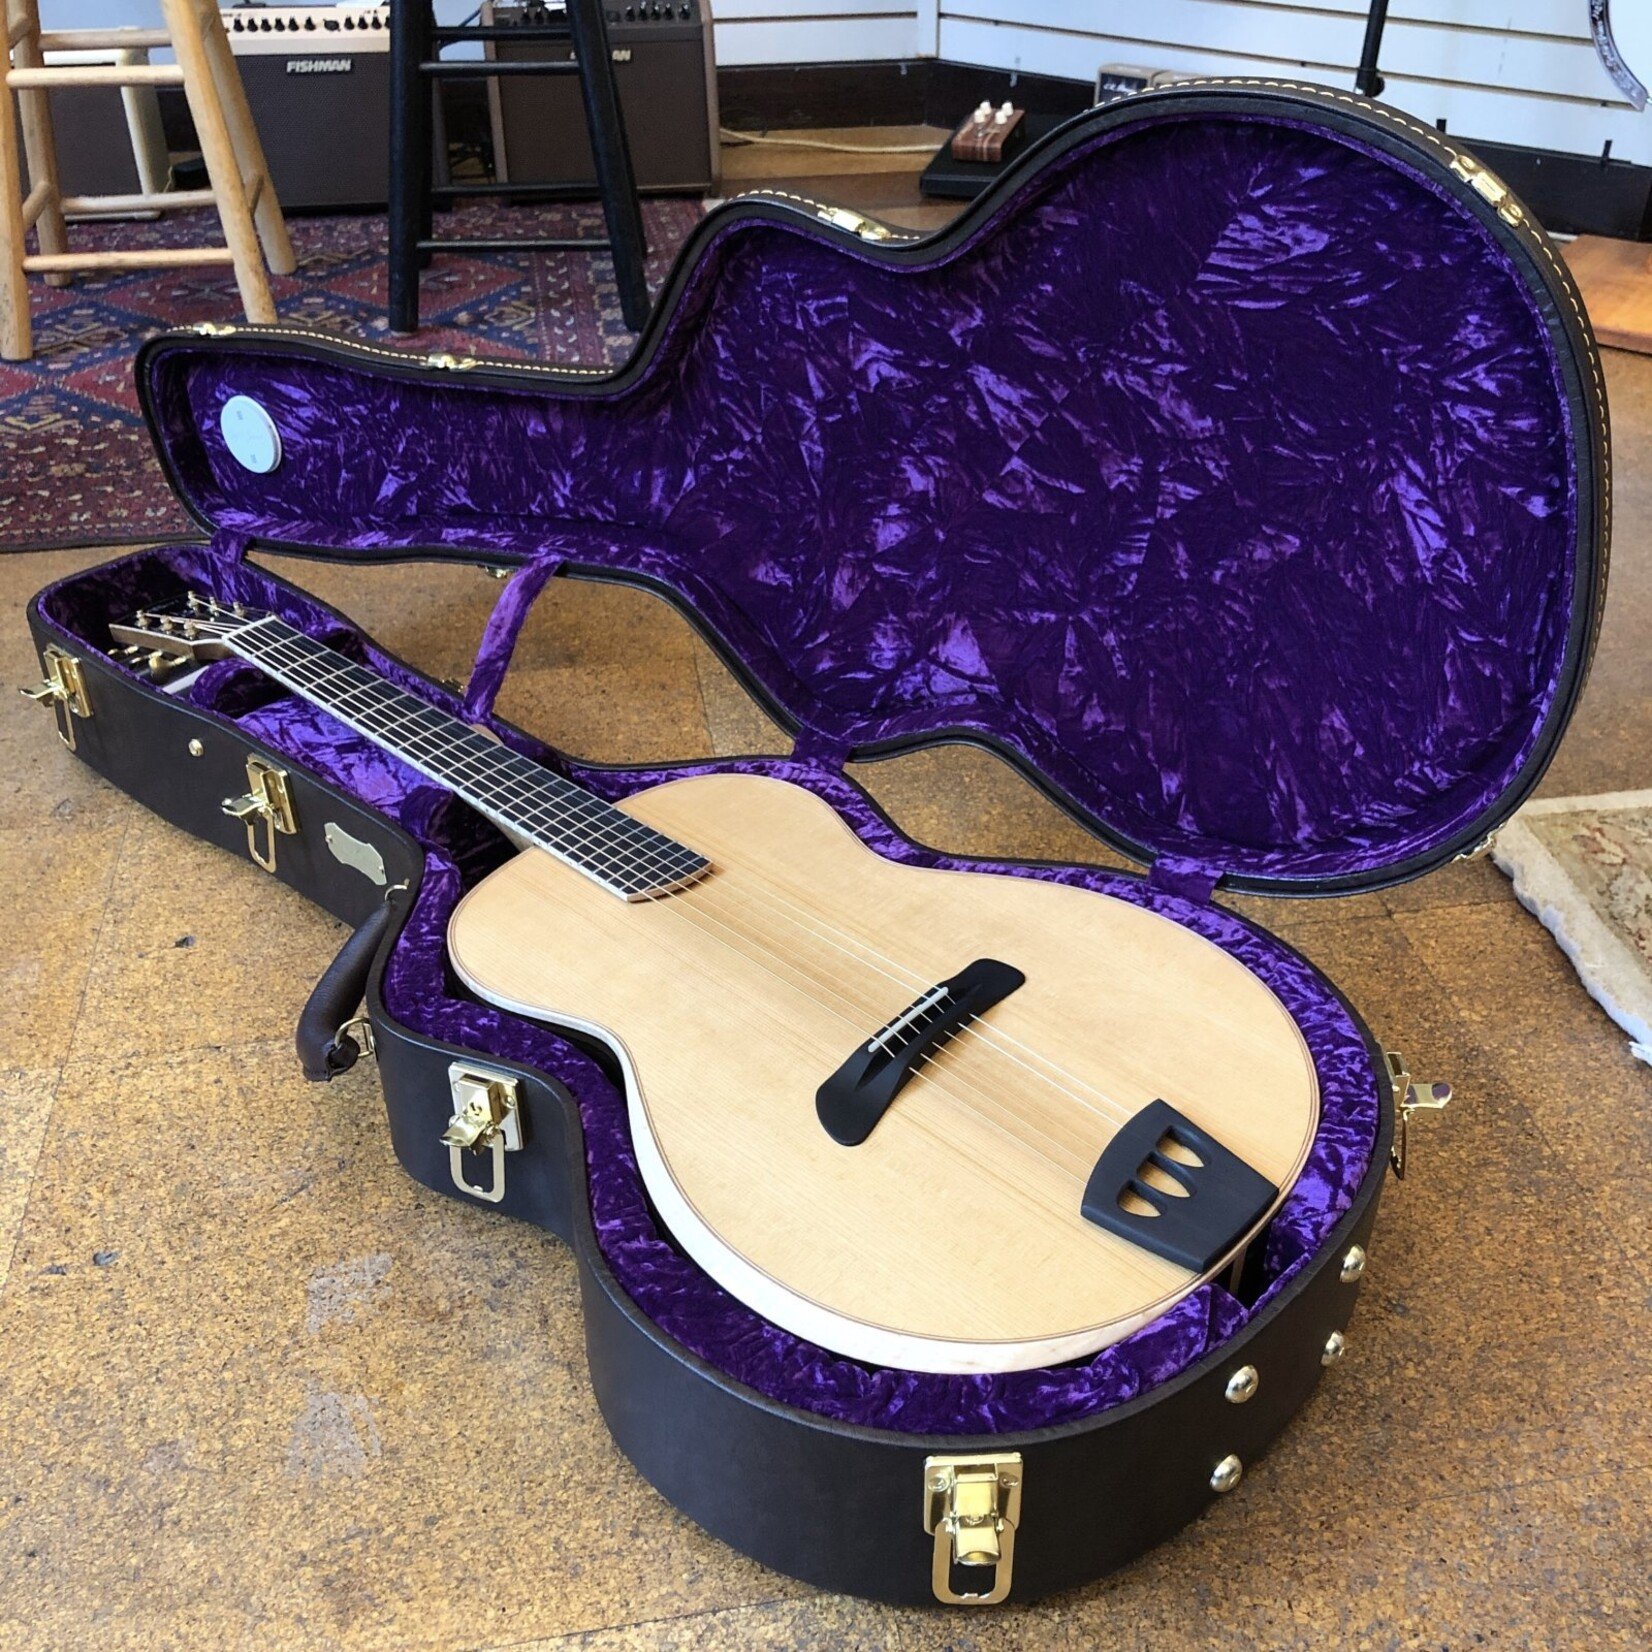 Batson Batson USA Custom Torrified Red Spruce/Ziricote Grand Concert Acoustic Guitar 2024 Floor Model w/Cedar Creek Case